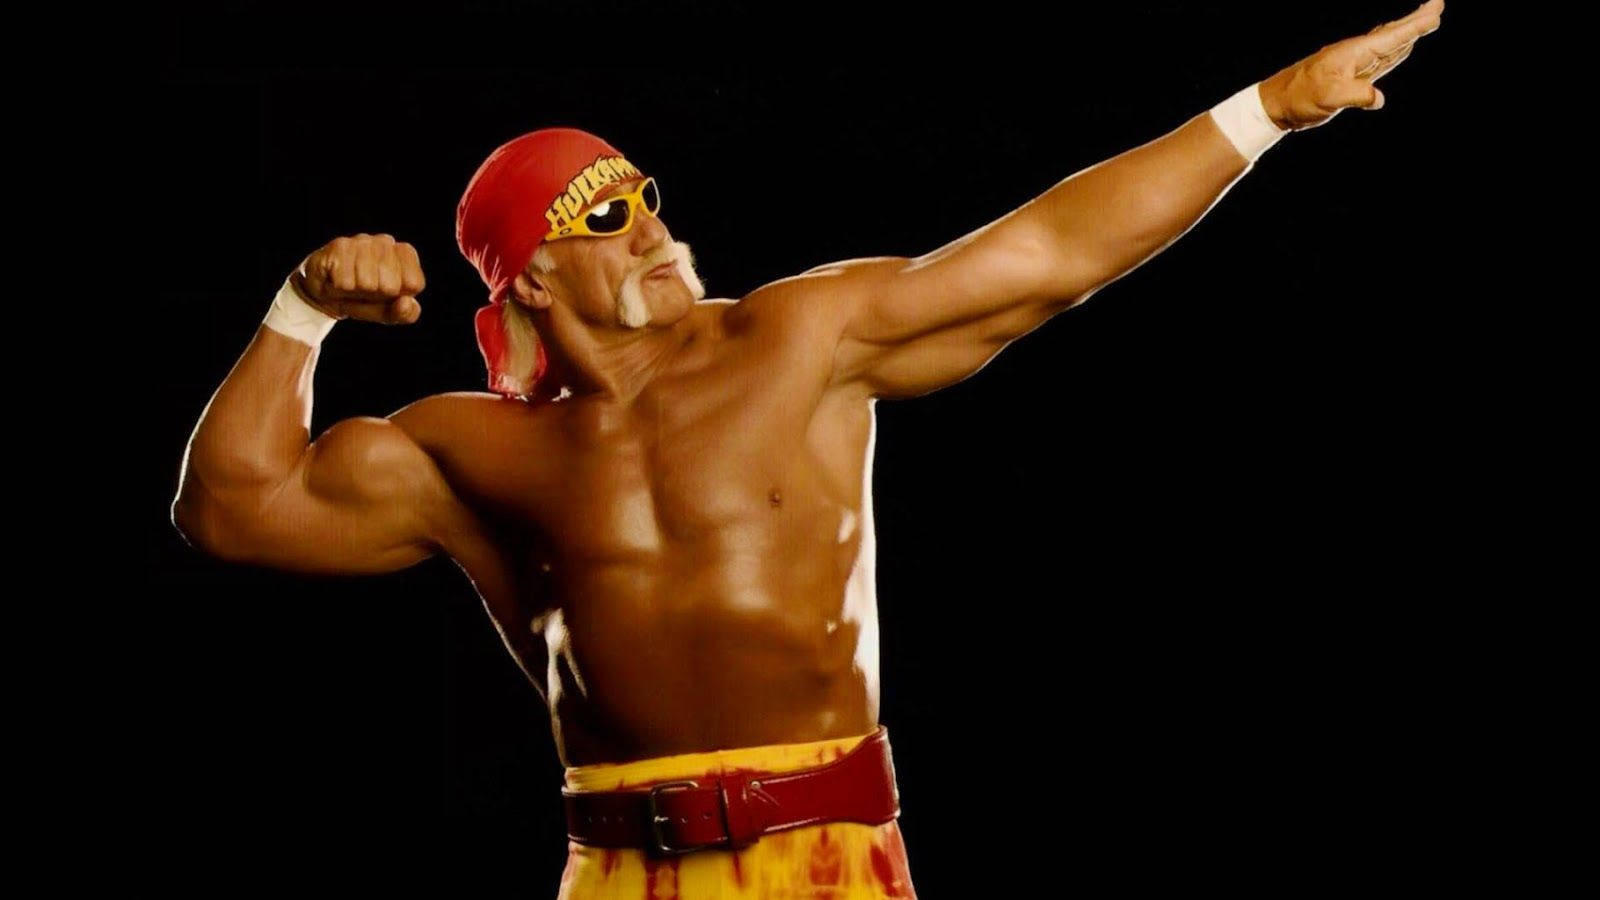 Hulk Hogan Superman Pose Background